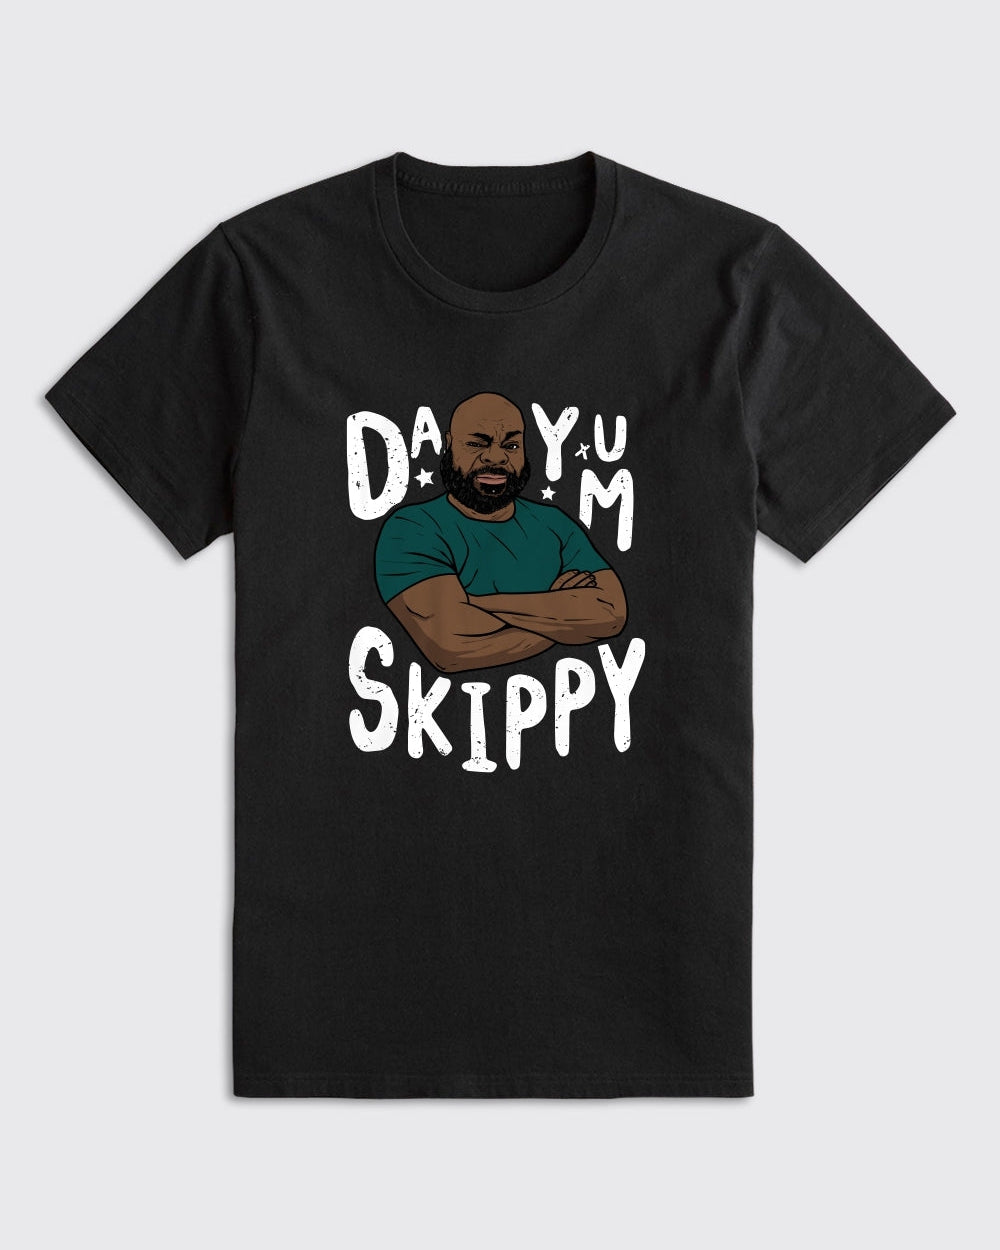 Hollis Thomas Dayum Skippy Shirt - Philly Sports Trips, T-Shirts - Philly Sports Shirts